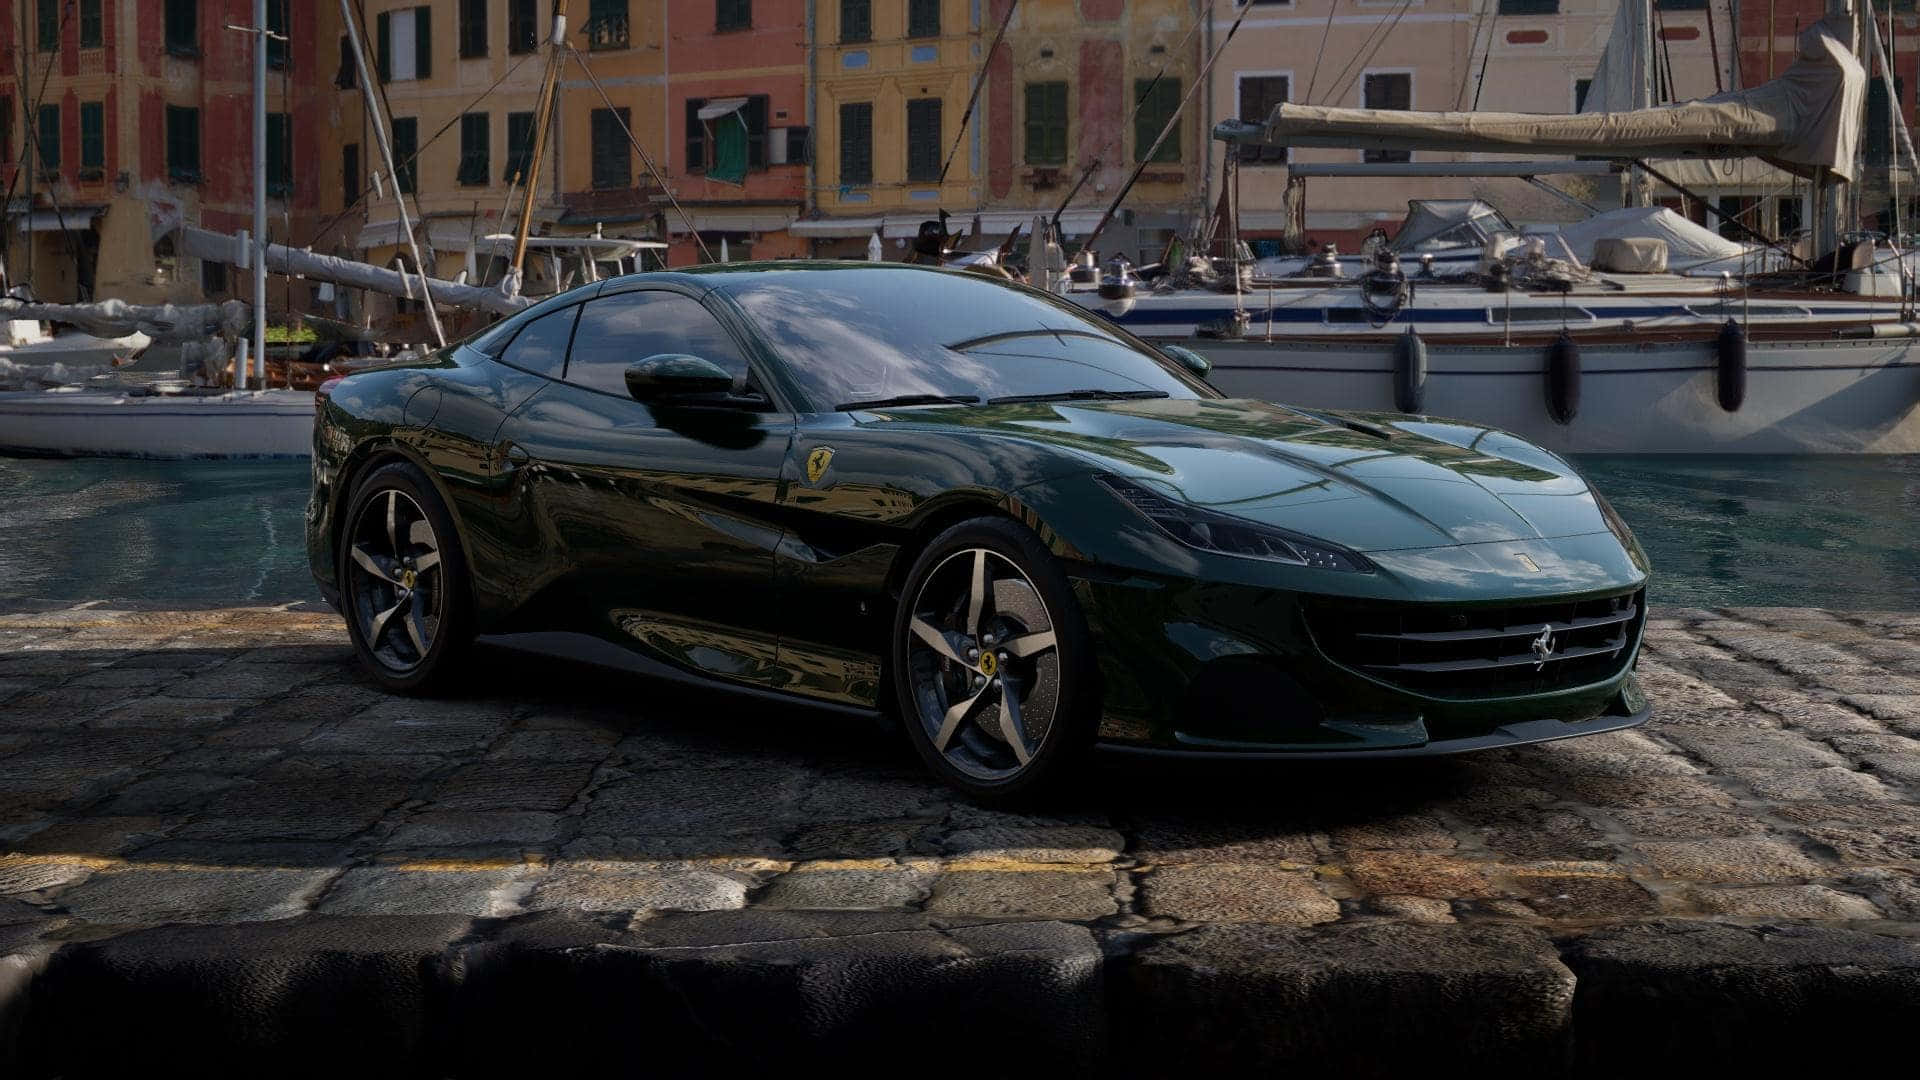 Sleek Ferrari Portofino Cruising on the Road Wallpaper